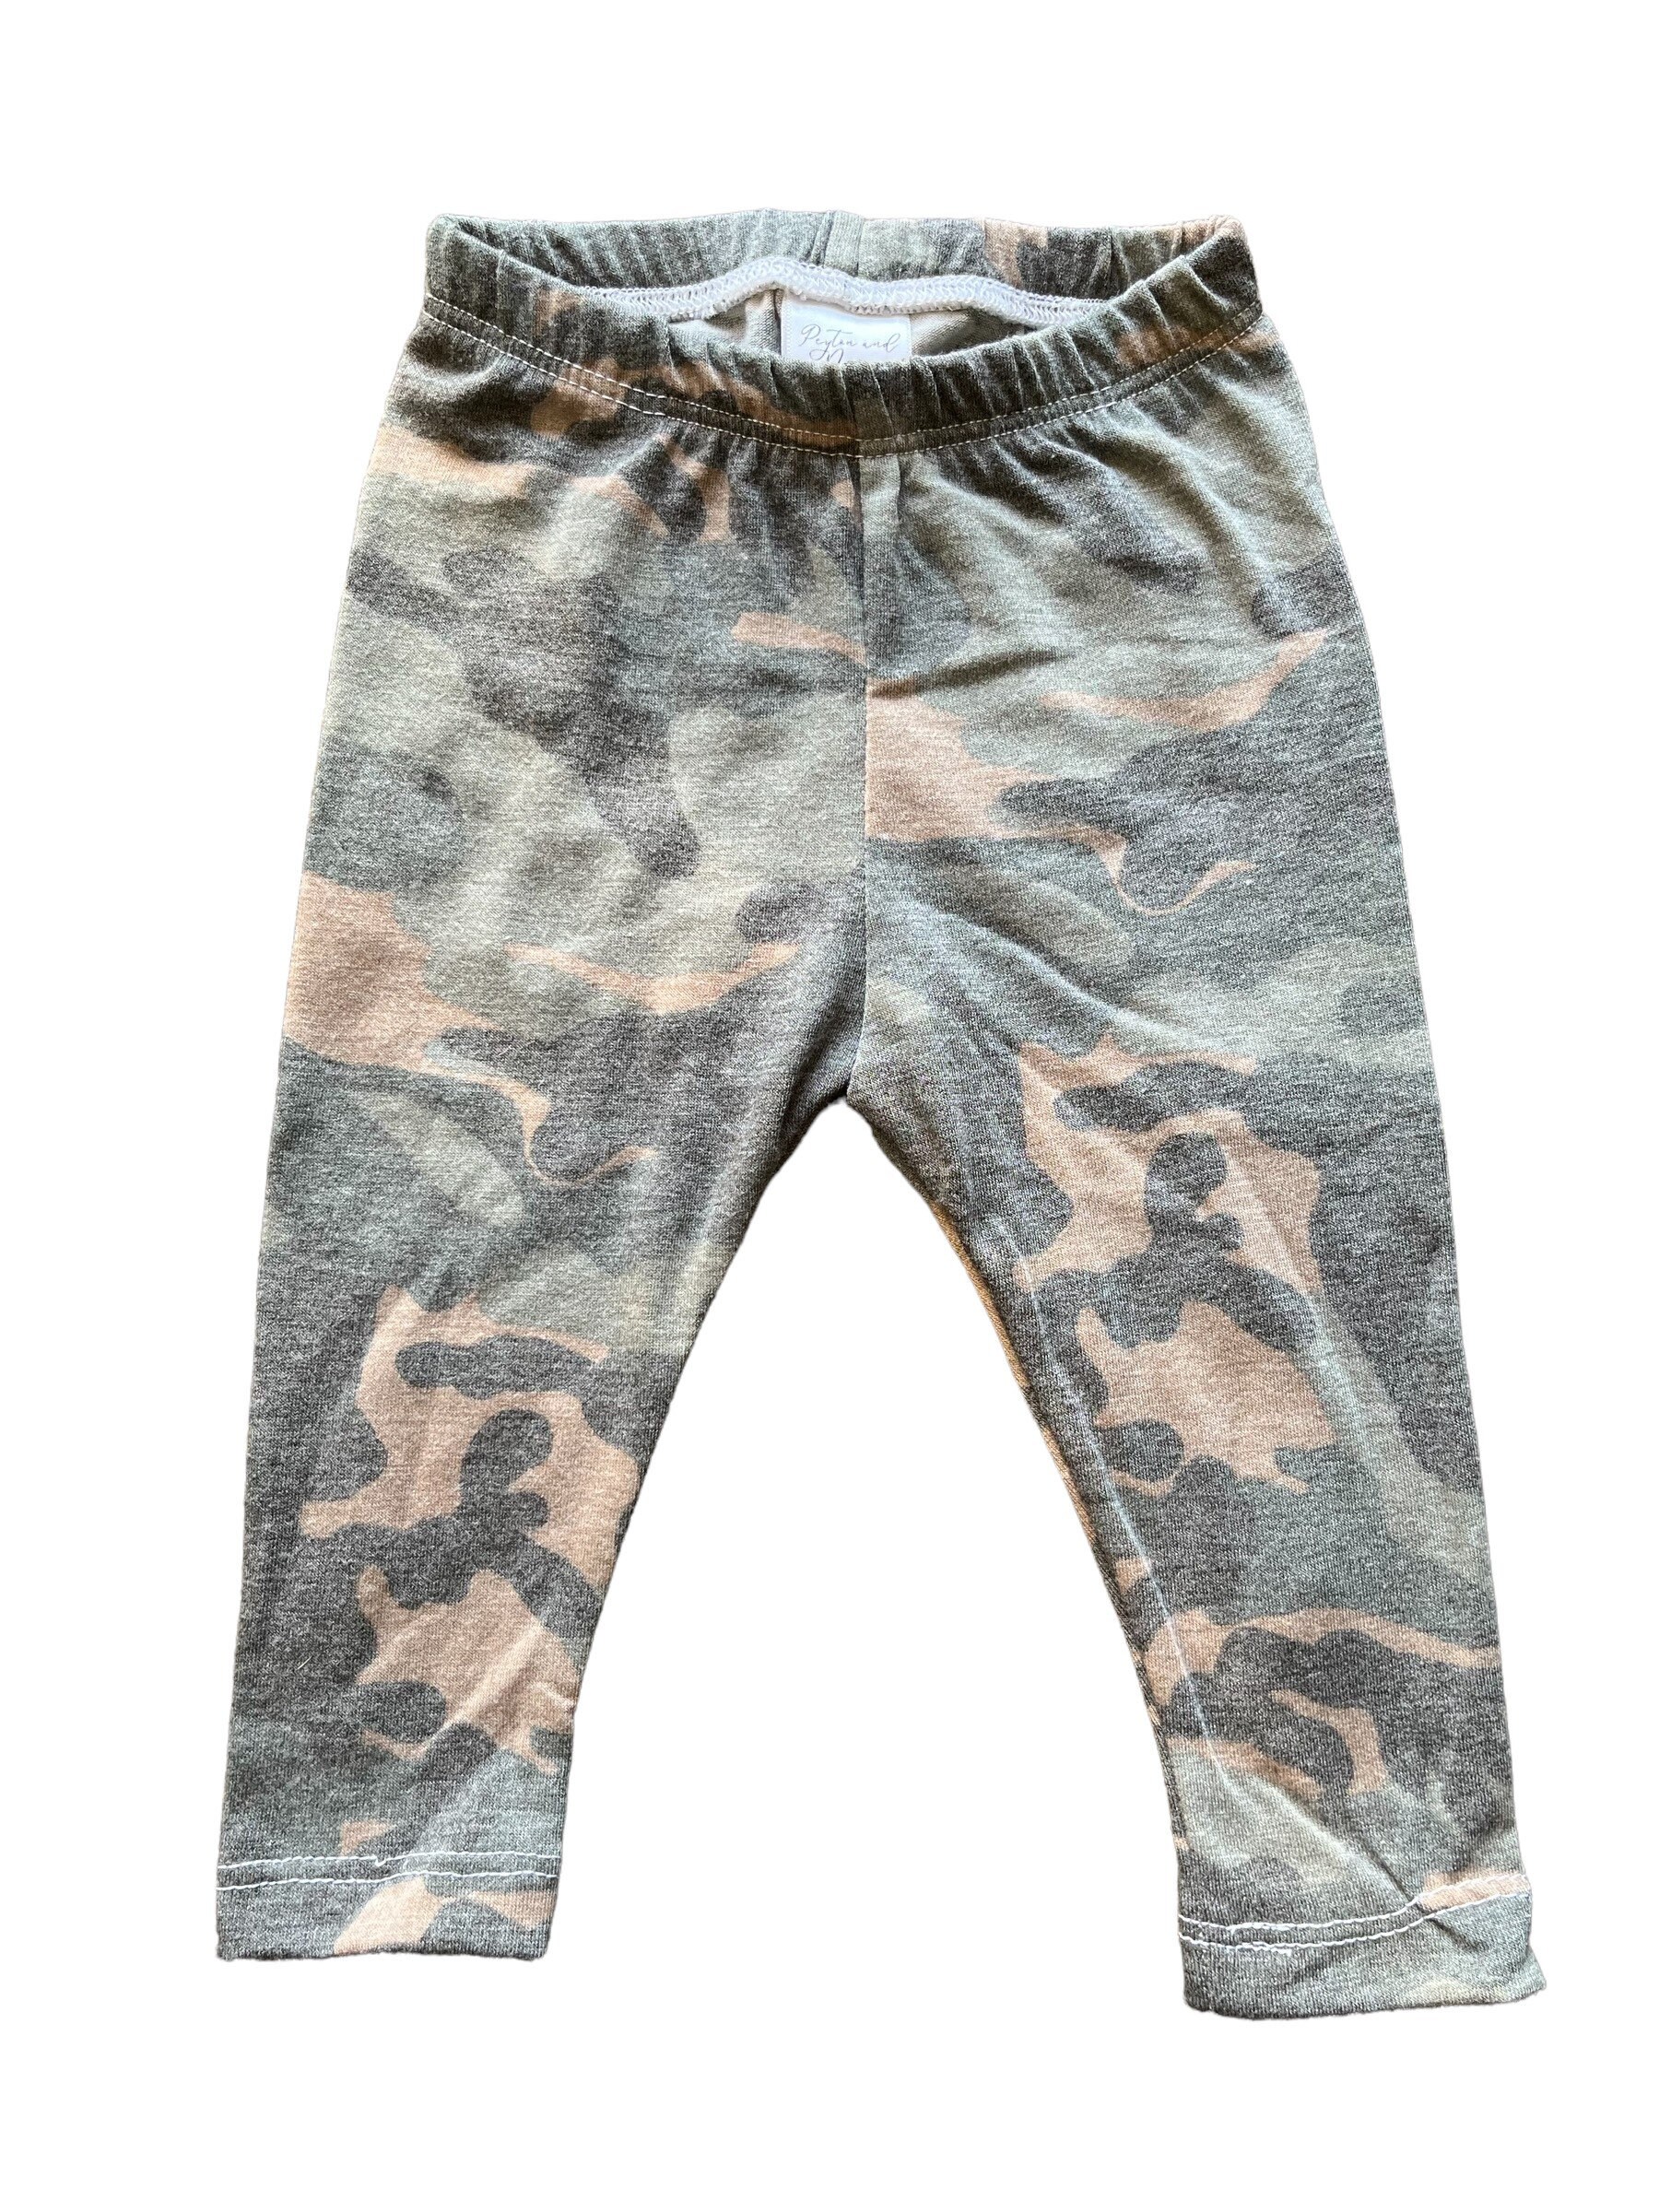 Camo Pants Leggings 100% Cotton Knit/jersey Camouflage Hunter Boy Girl Kids  Newborn 3 6 9 12 18 Months 2T 3 4 5 6 